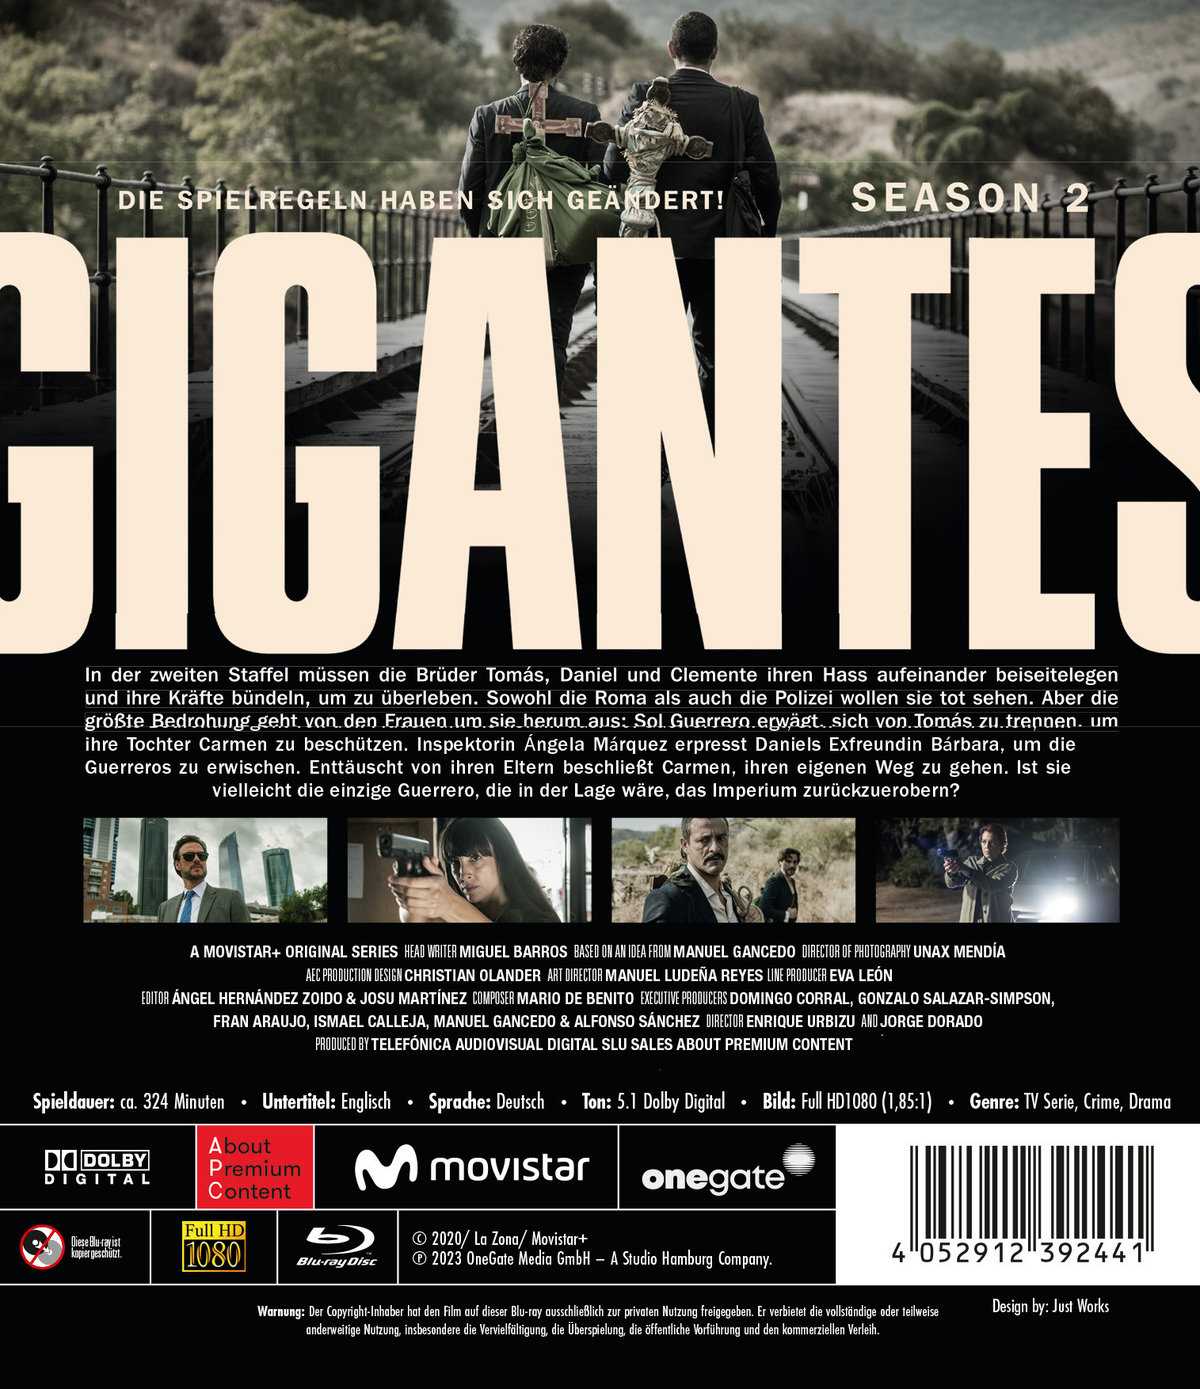 Gigantes - Season 2  [2 BRs]  (Blu-ray Disc)